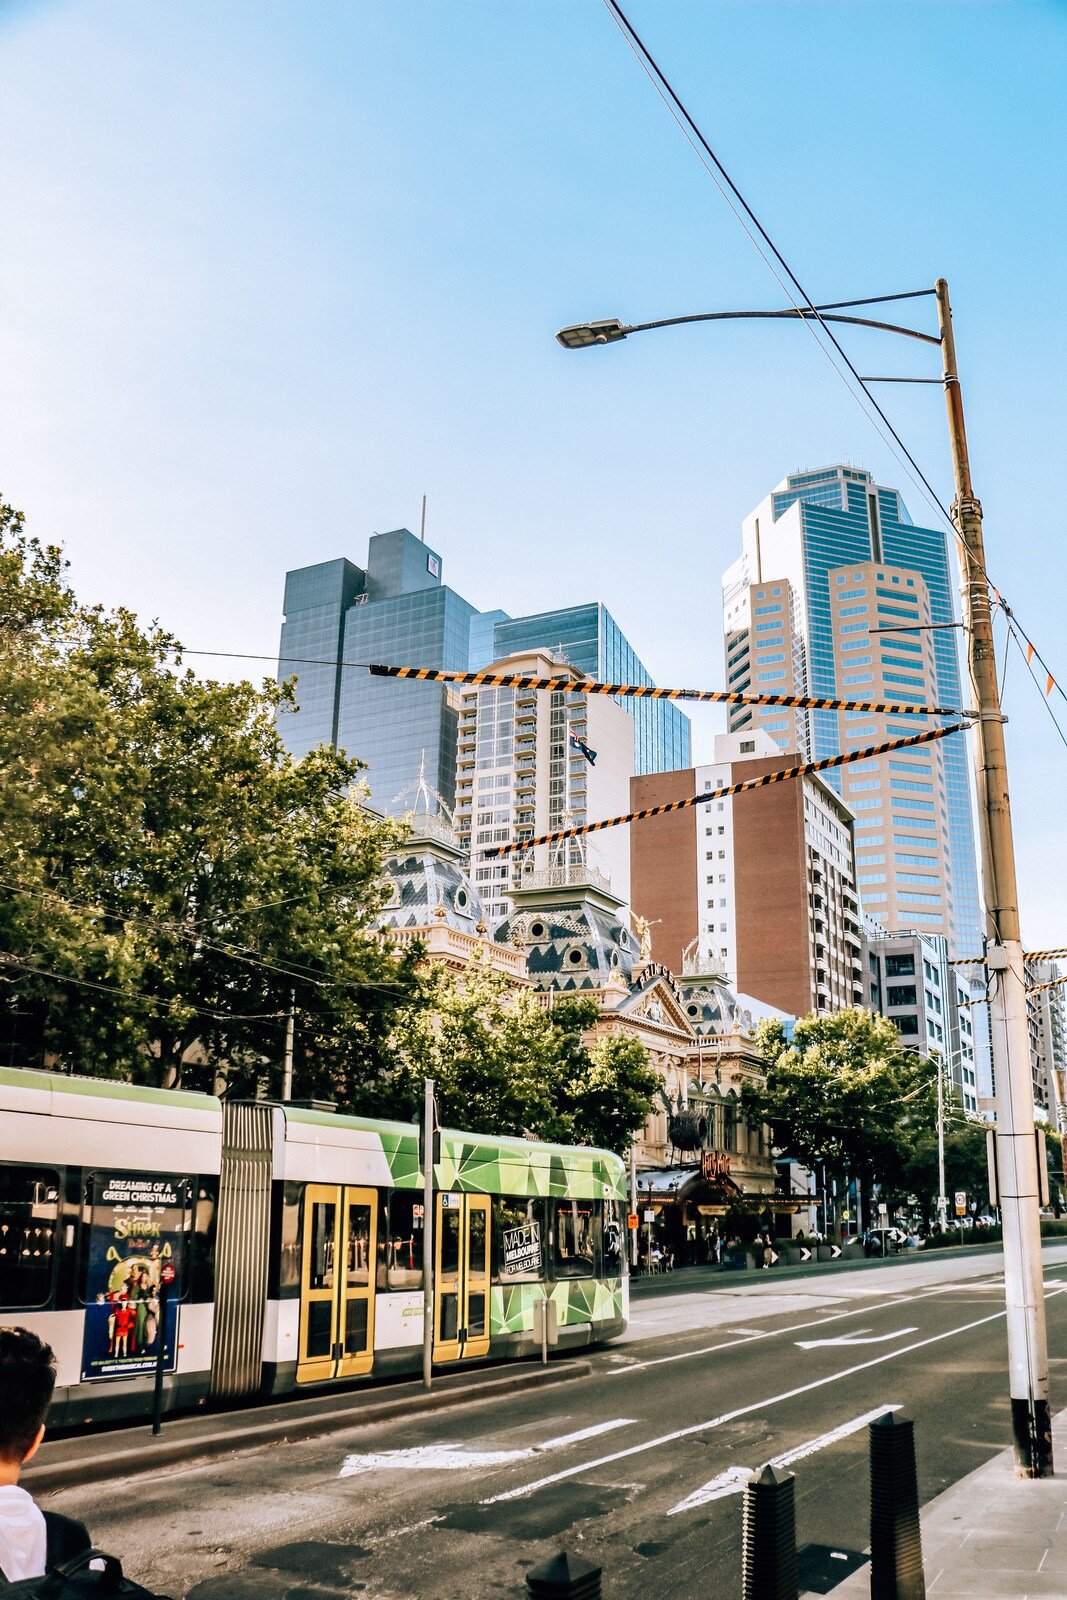 Trams in Melbourne city centre